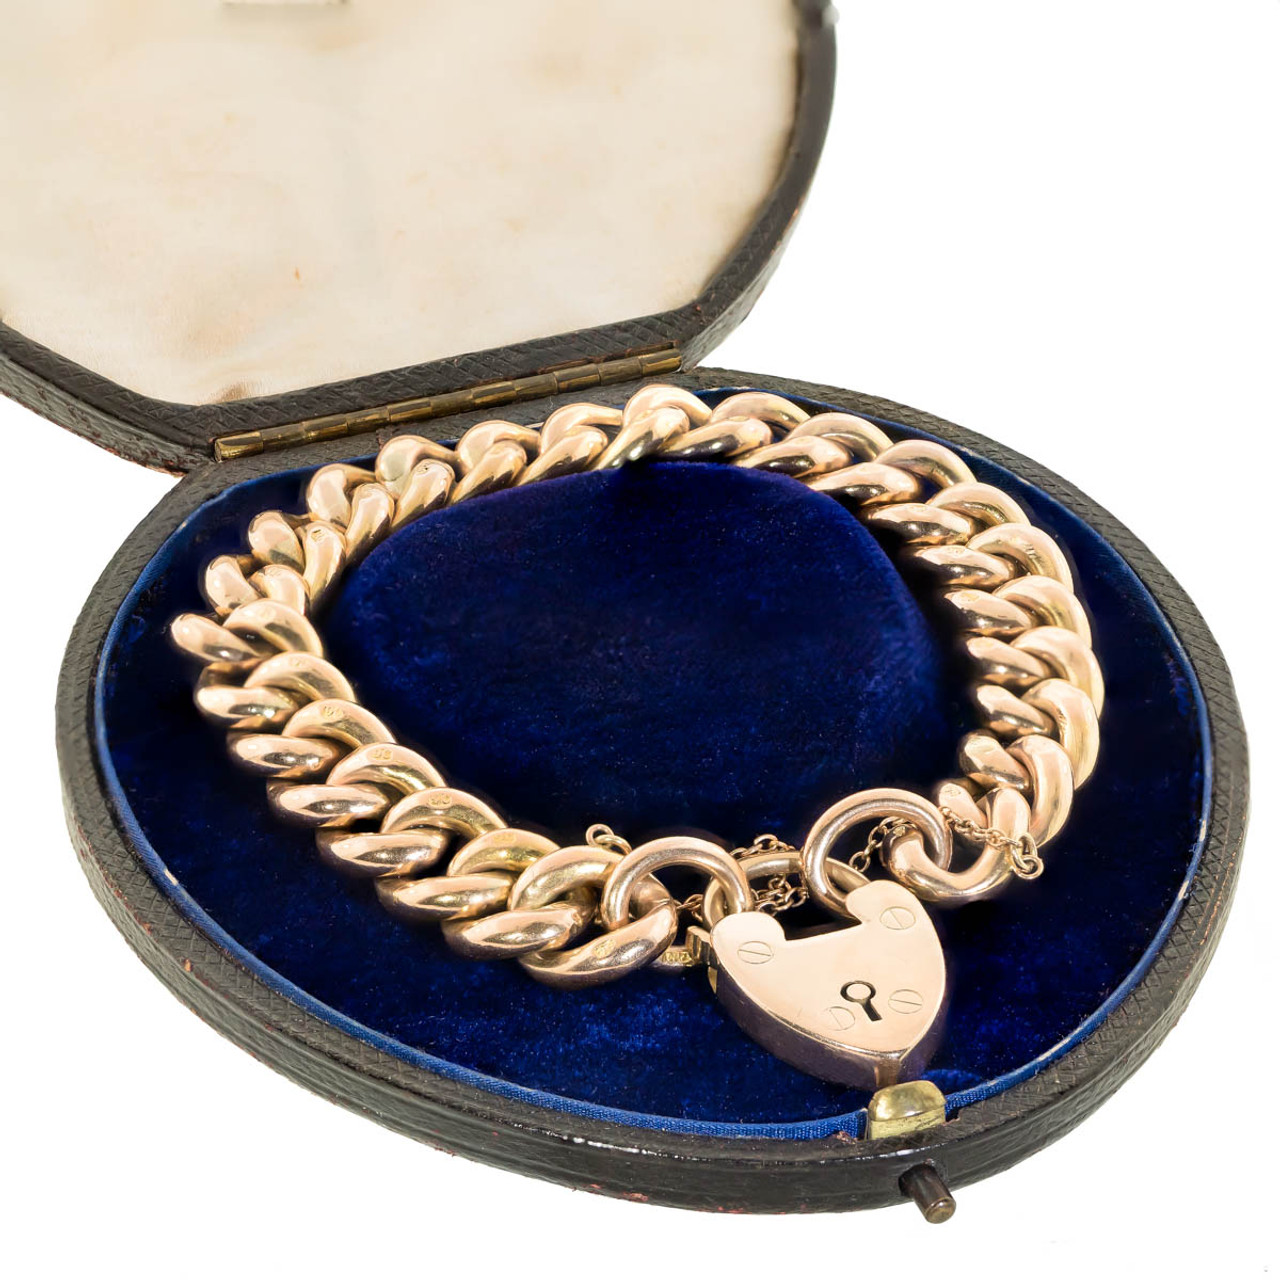 9ct Yellow Gold Charm Bracelet & Heart Padlock - 7